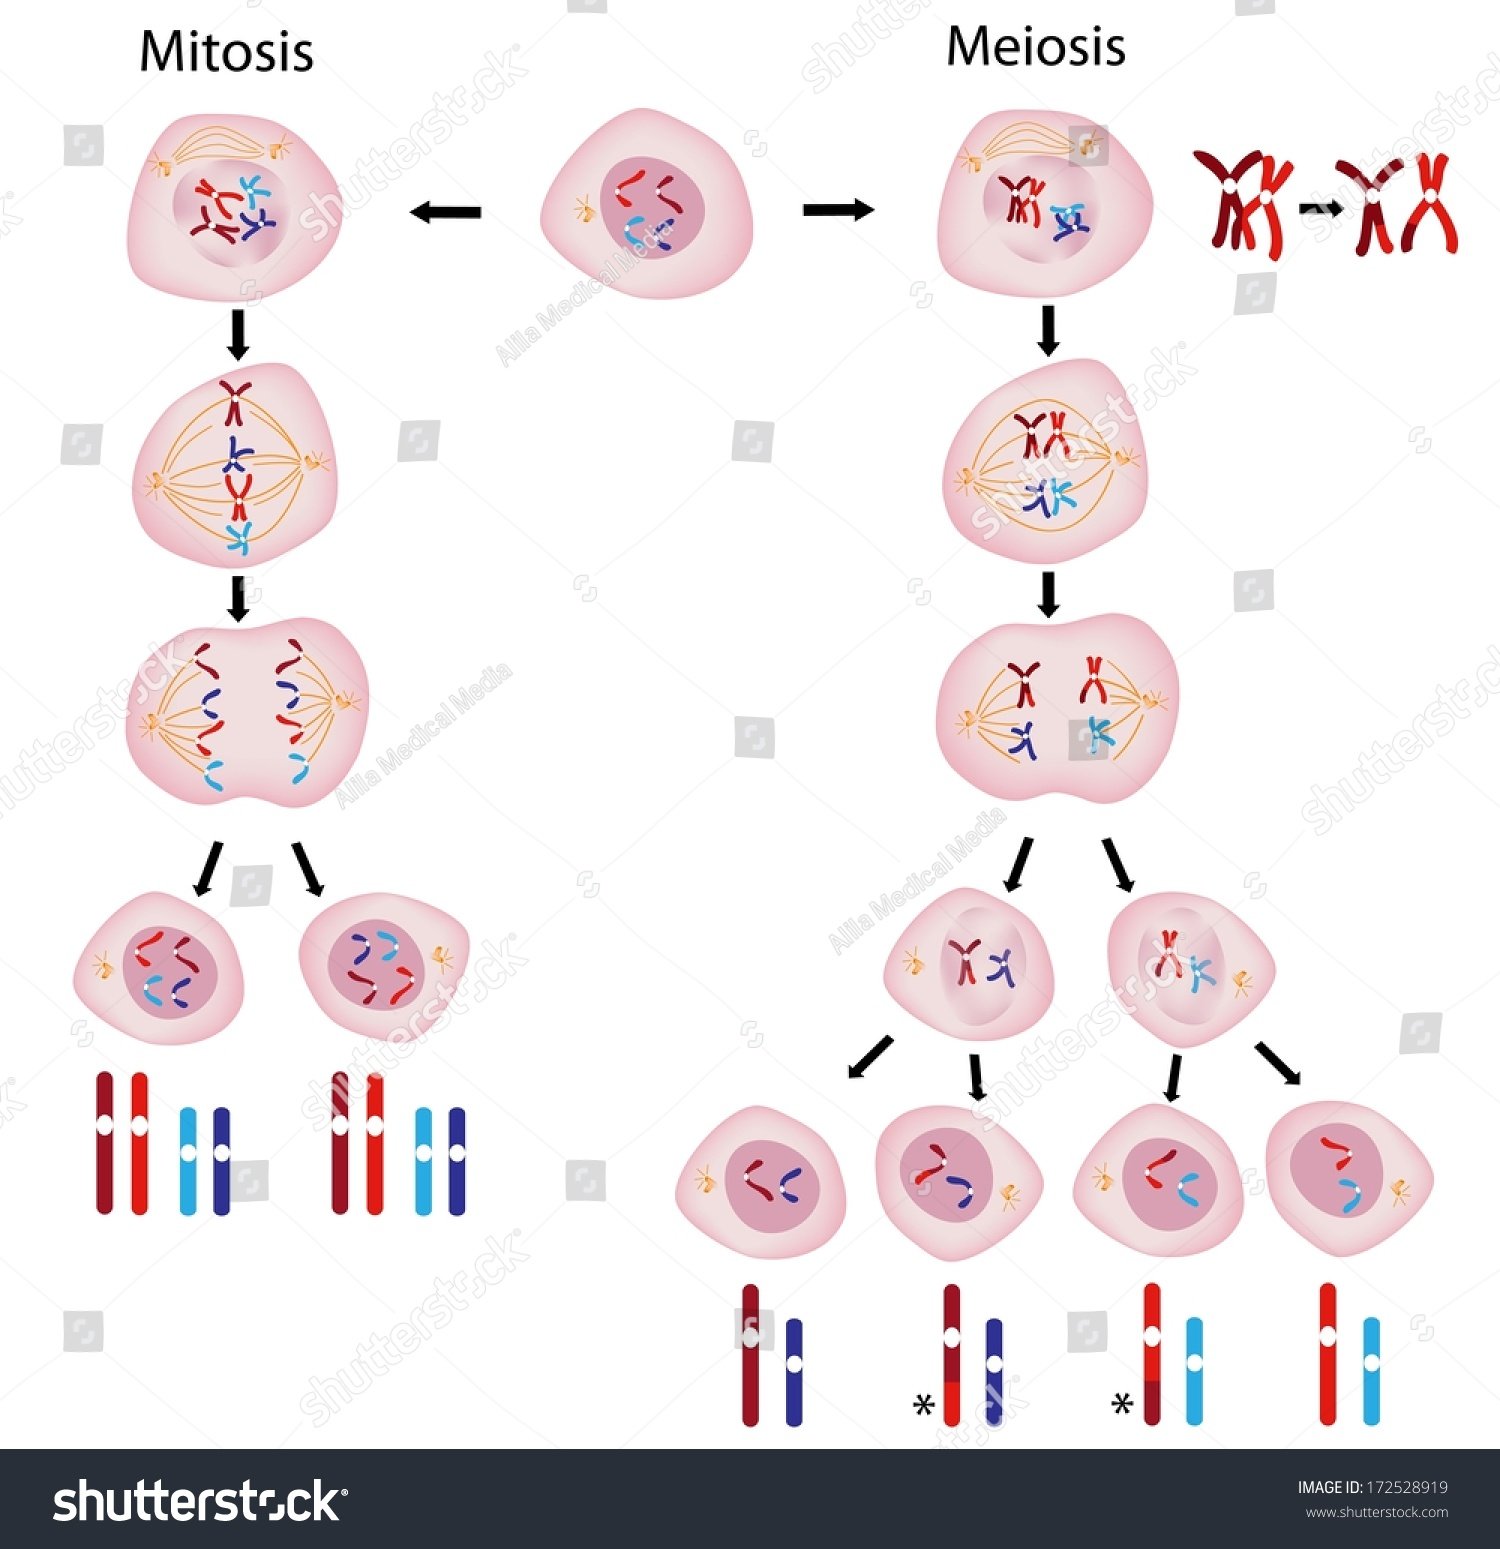 stock-photo-mitosis-vs-meiosis-172528919.jpg